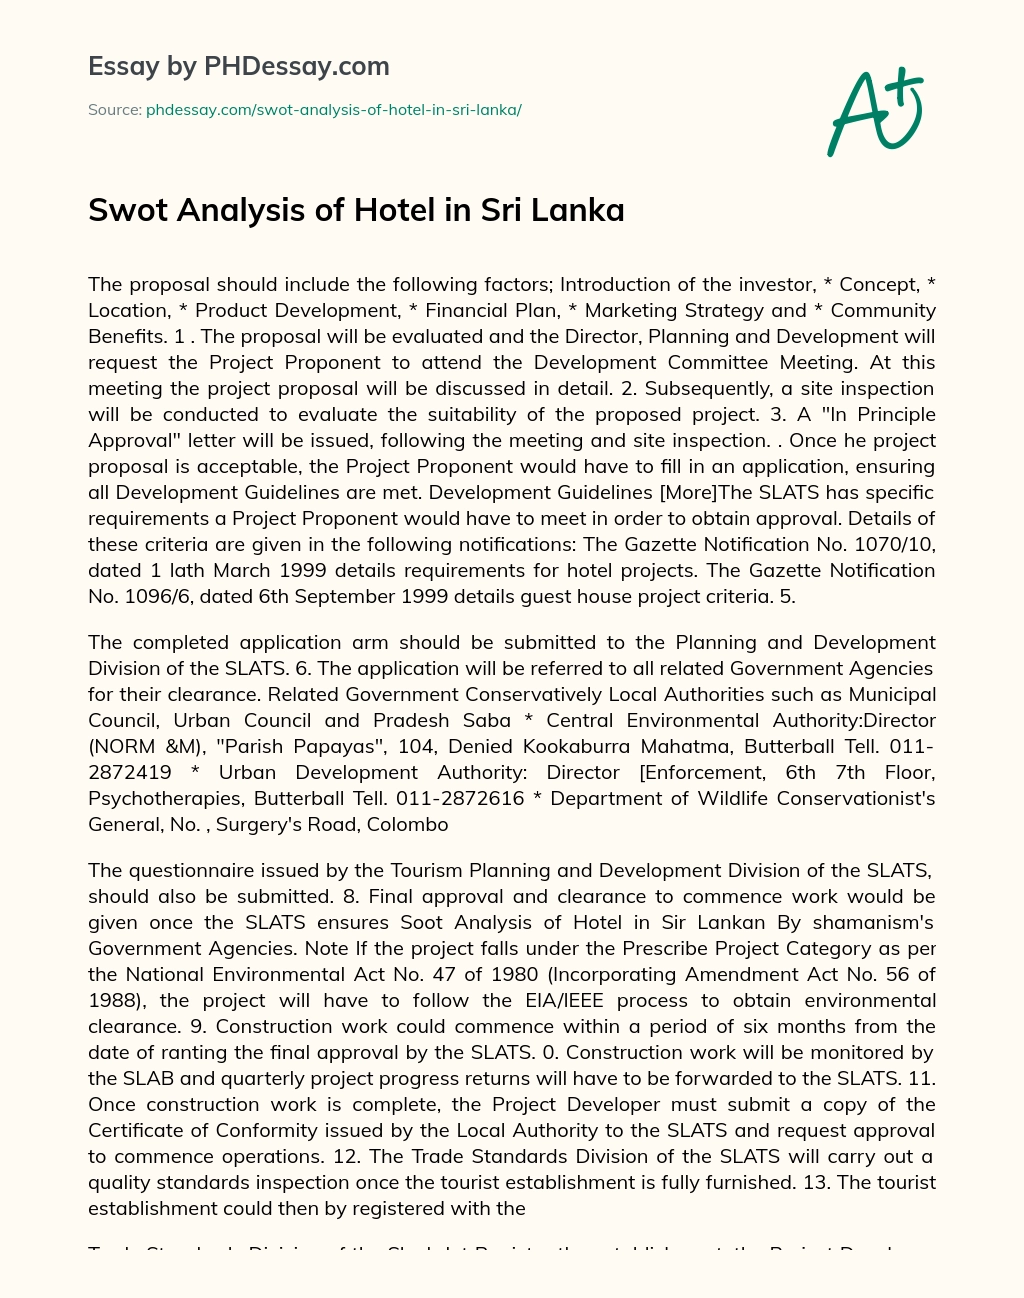 Swot Analysis of Hotel in Sri Lanka essay